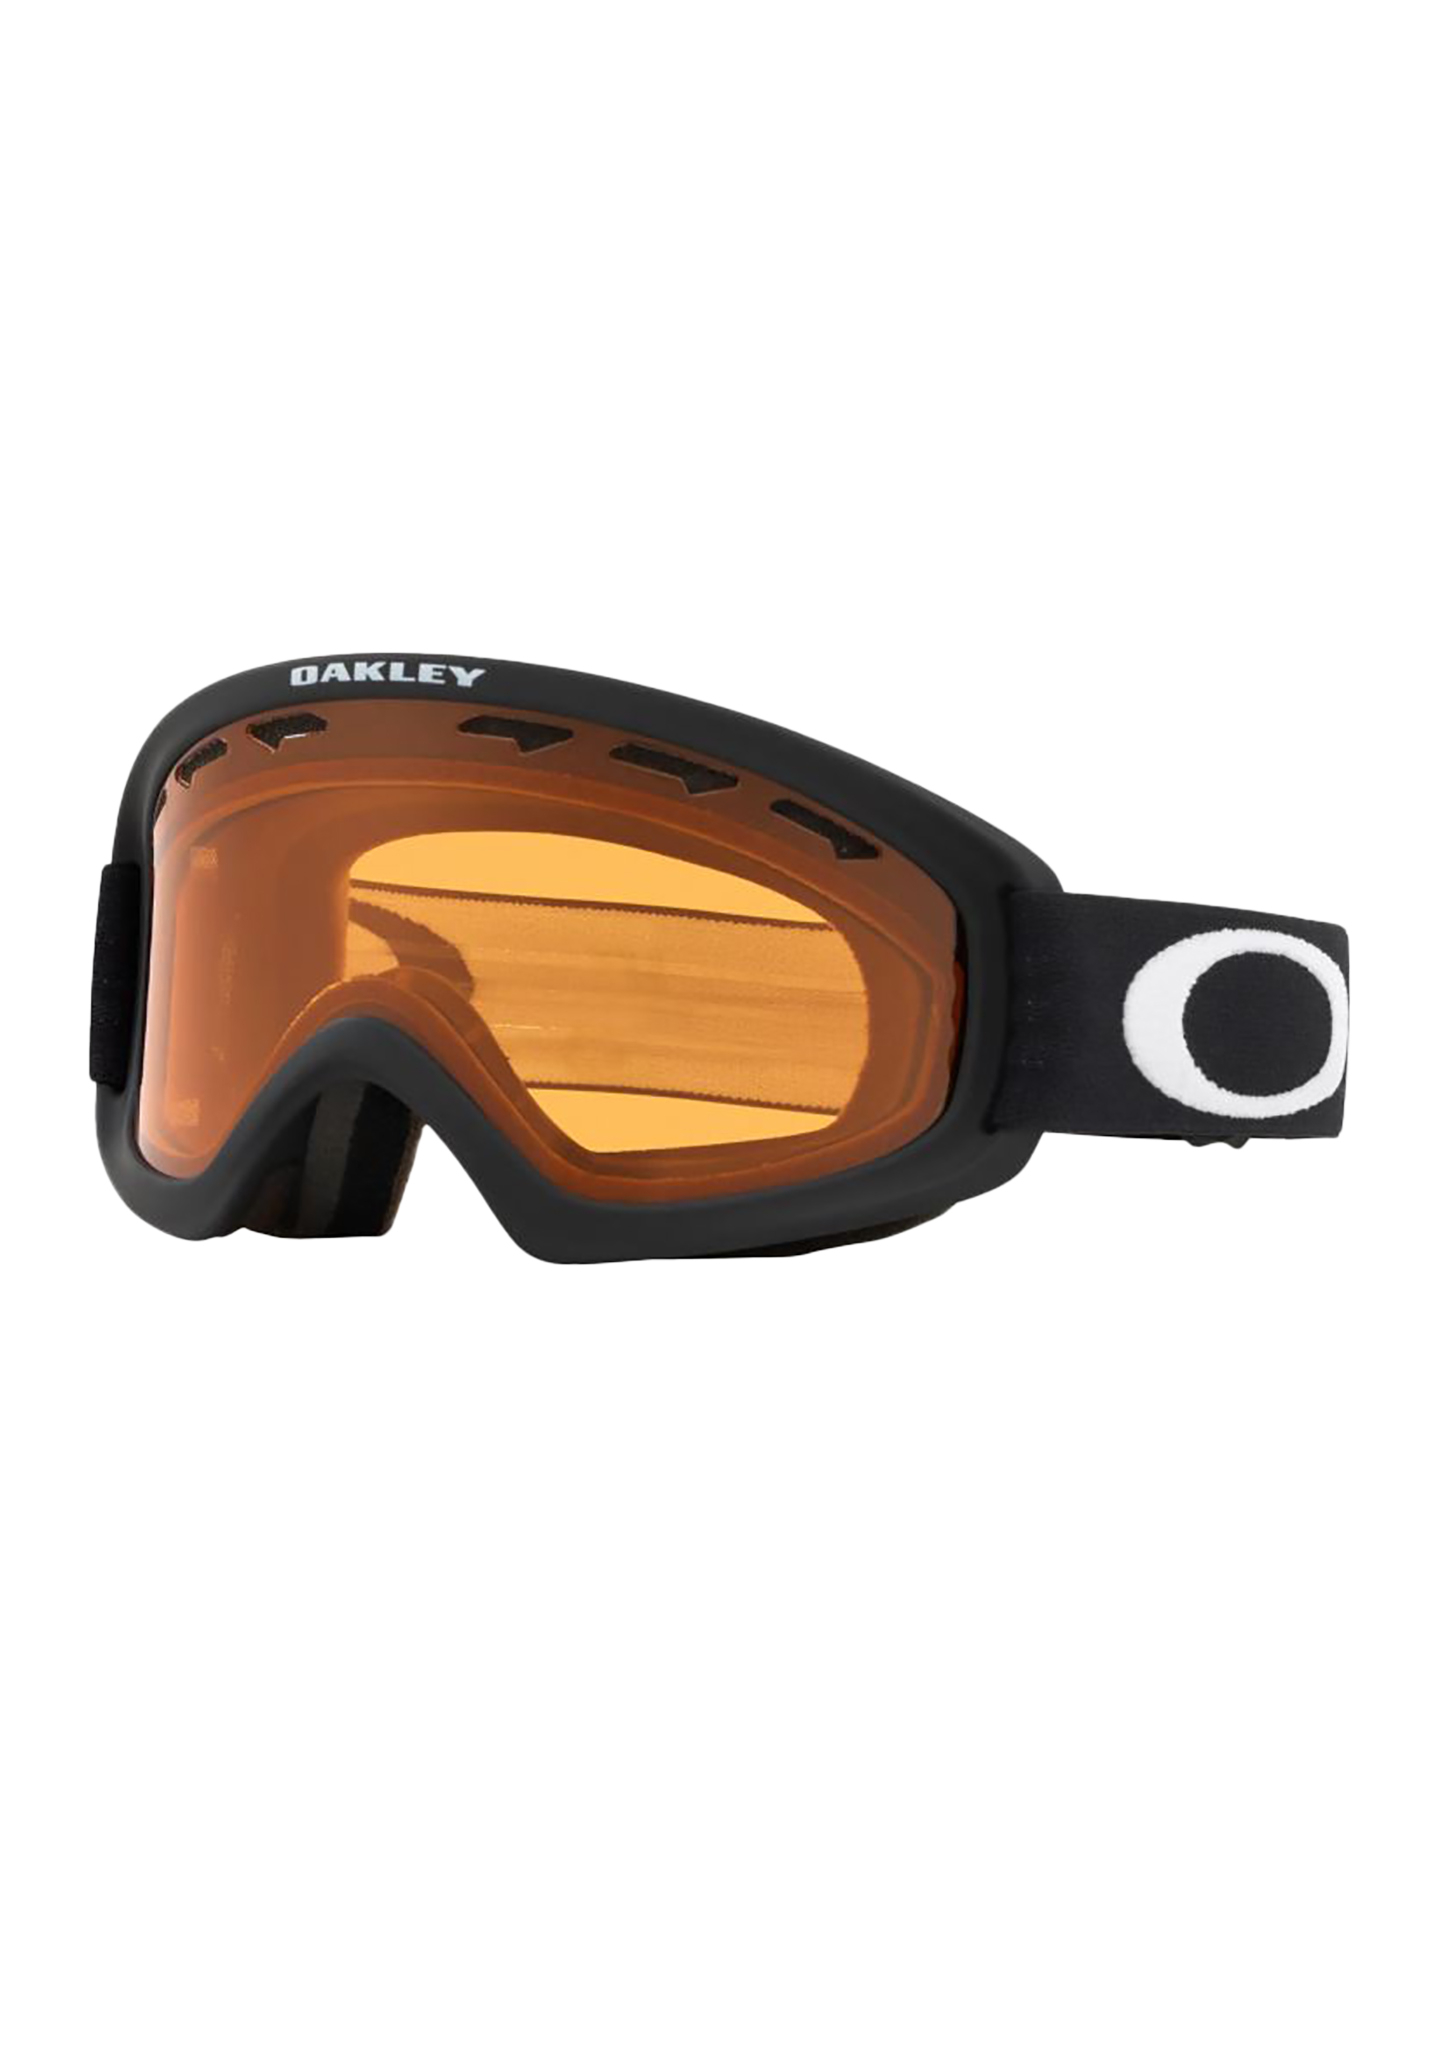 Oakley O Frame 2.0 Pro S Snowboardbrillen mattschwarz/persimone One Size